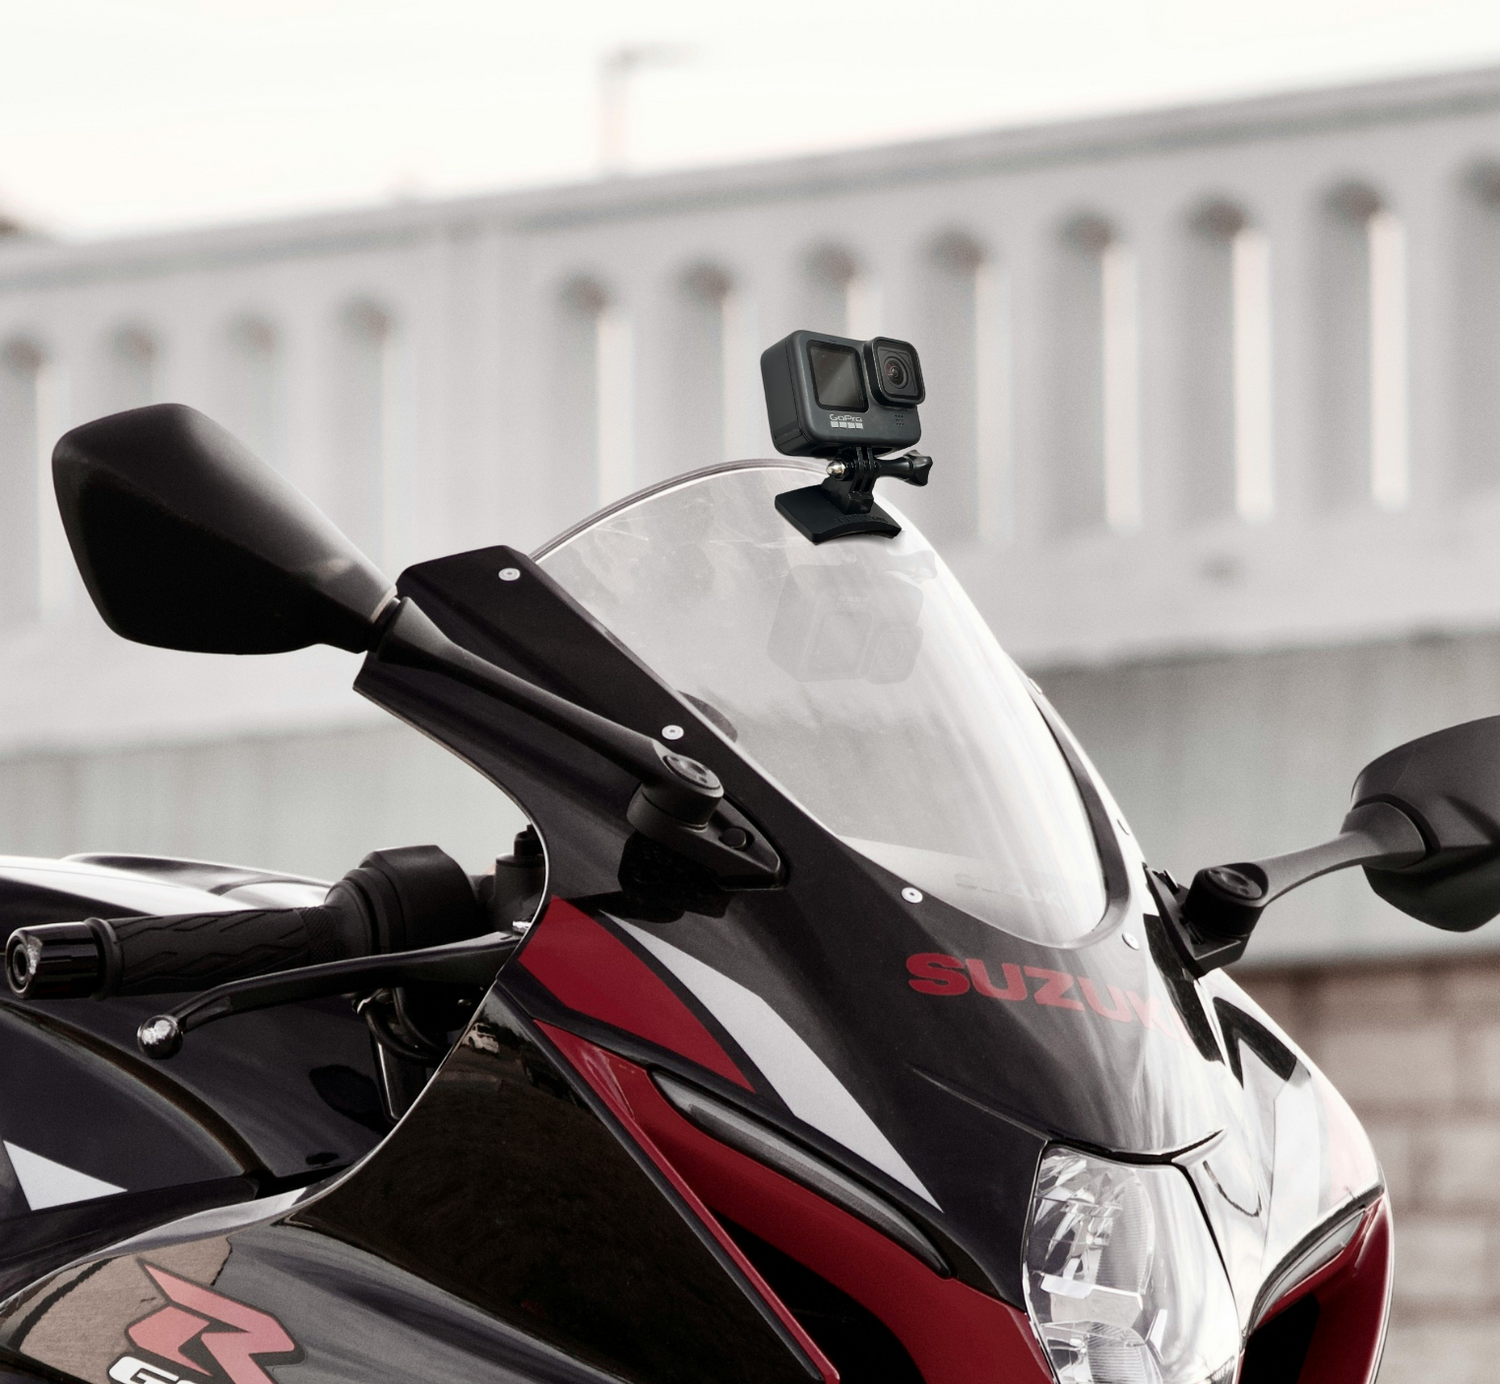 Flexible action camera mount on motorcycle windscreen